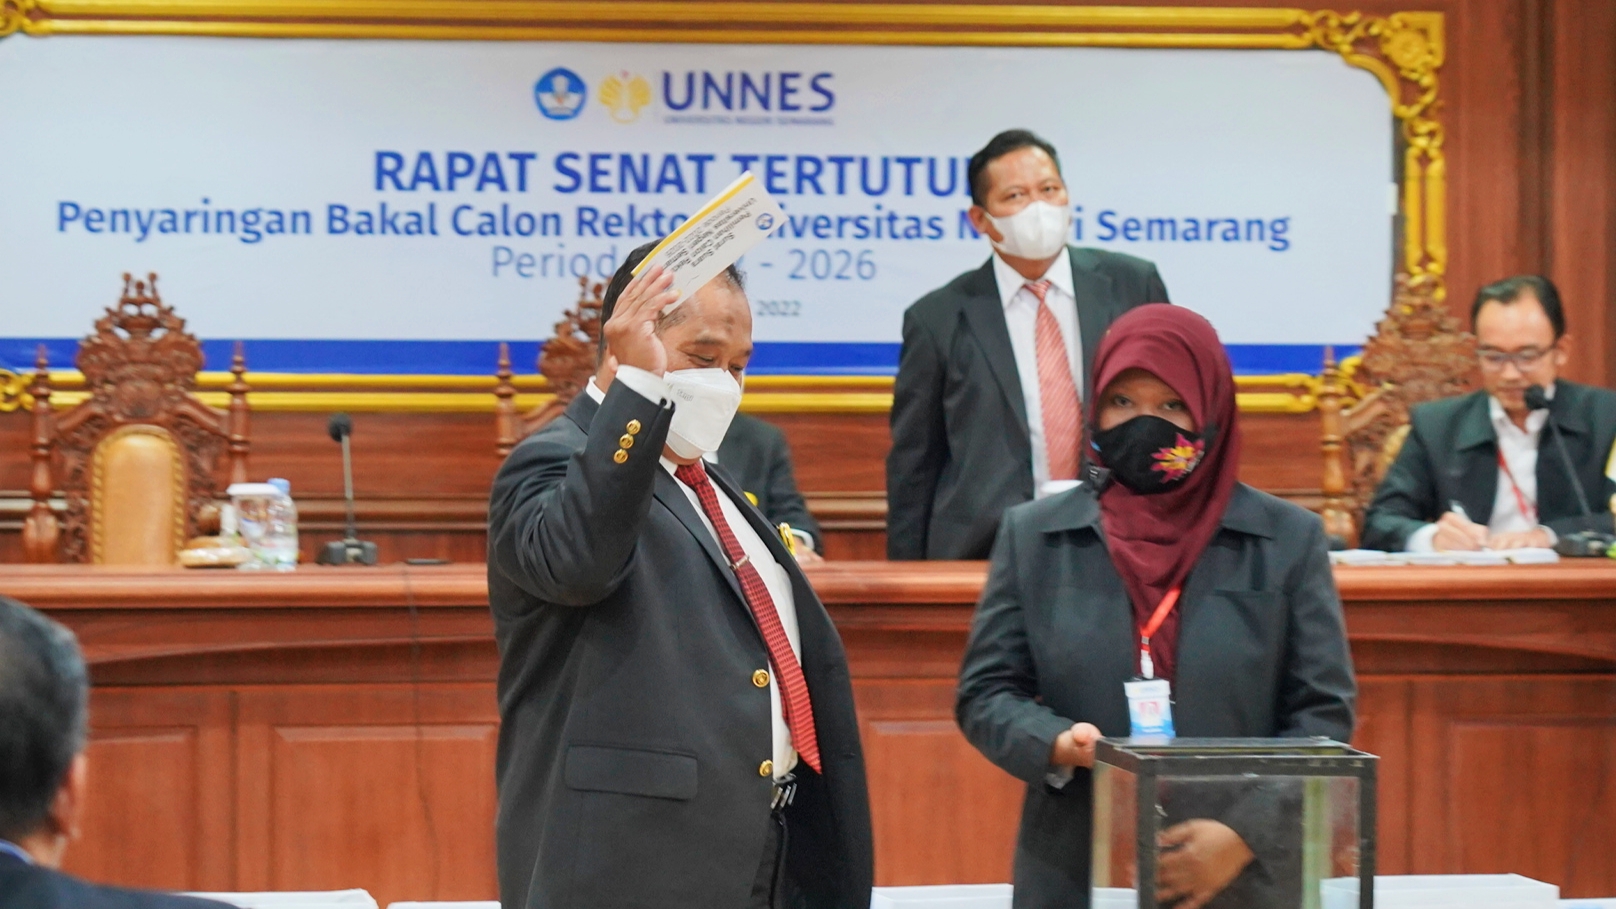 Tujuh Balon Paparkan Visi Misi, Rektor UNNES Prof Fathur Ingatkan Untuk Menjaga Amanah